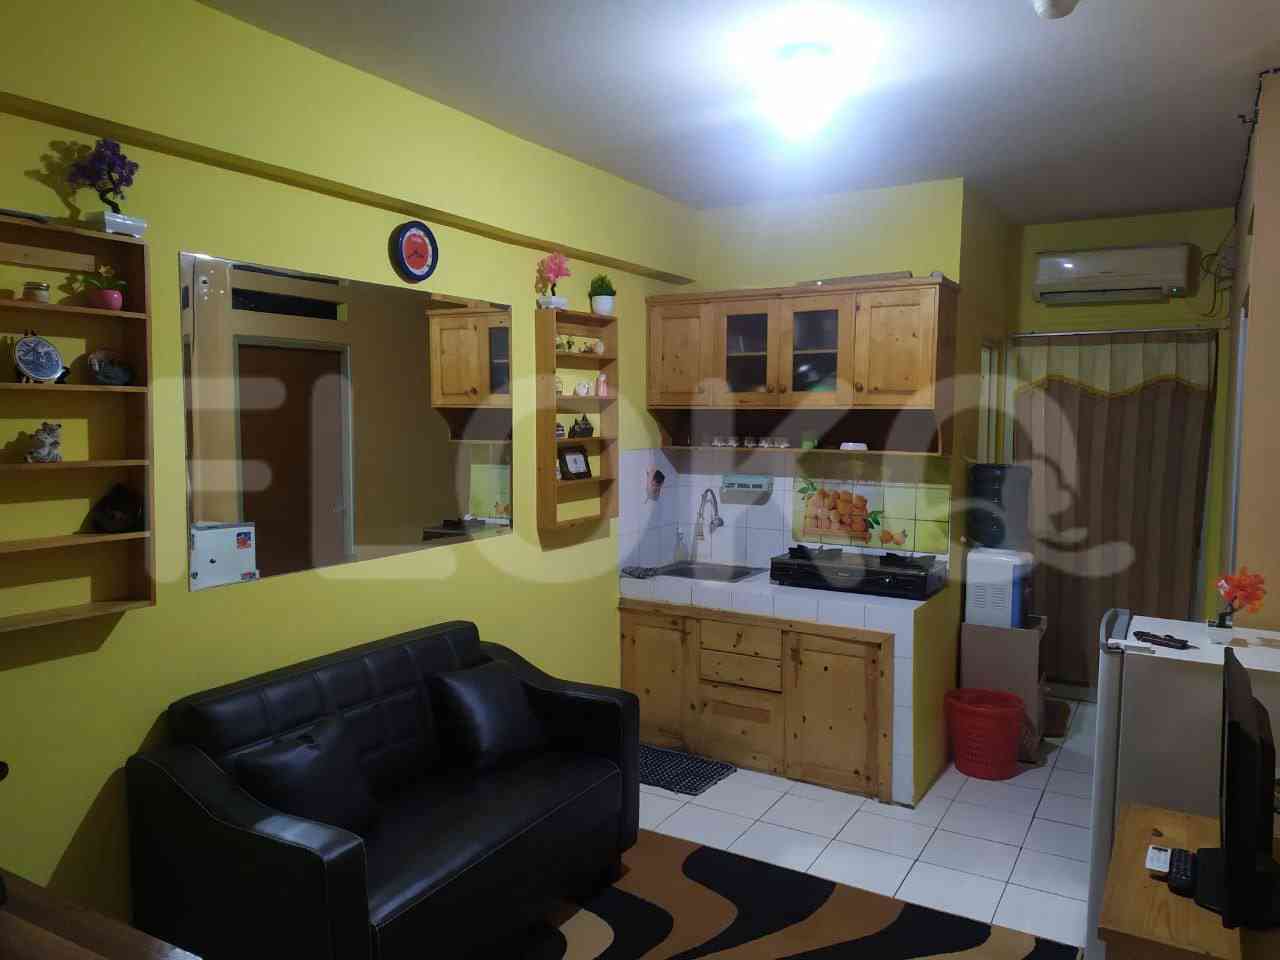 2 Bedroom on 16th Floor for Rent in Cibubur Village Apartment - fci5e0 2